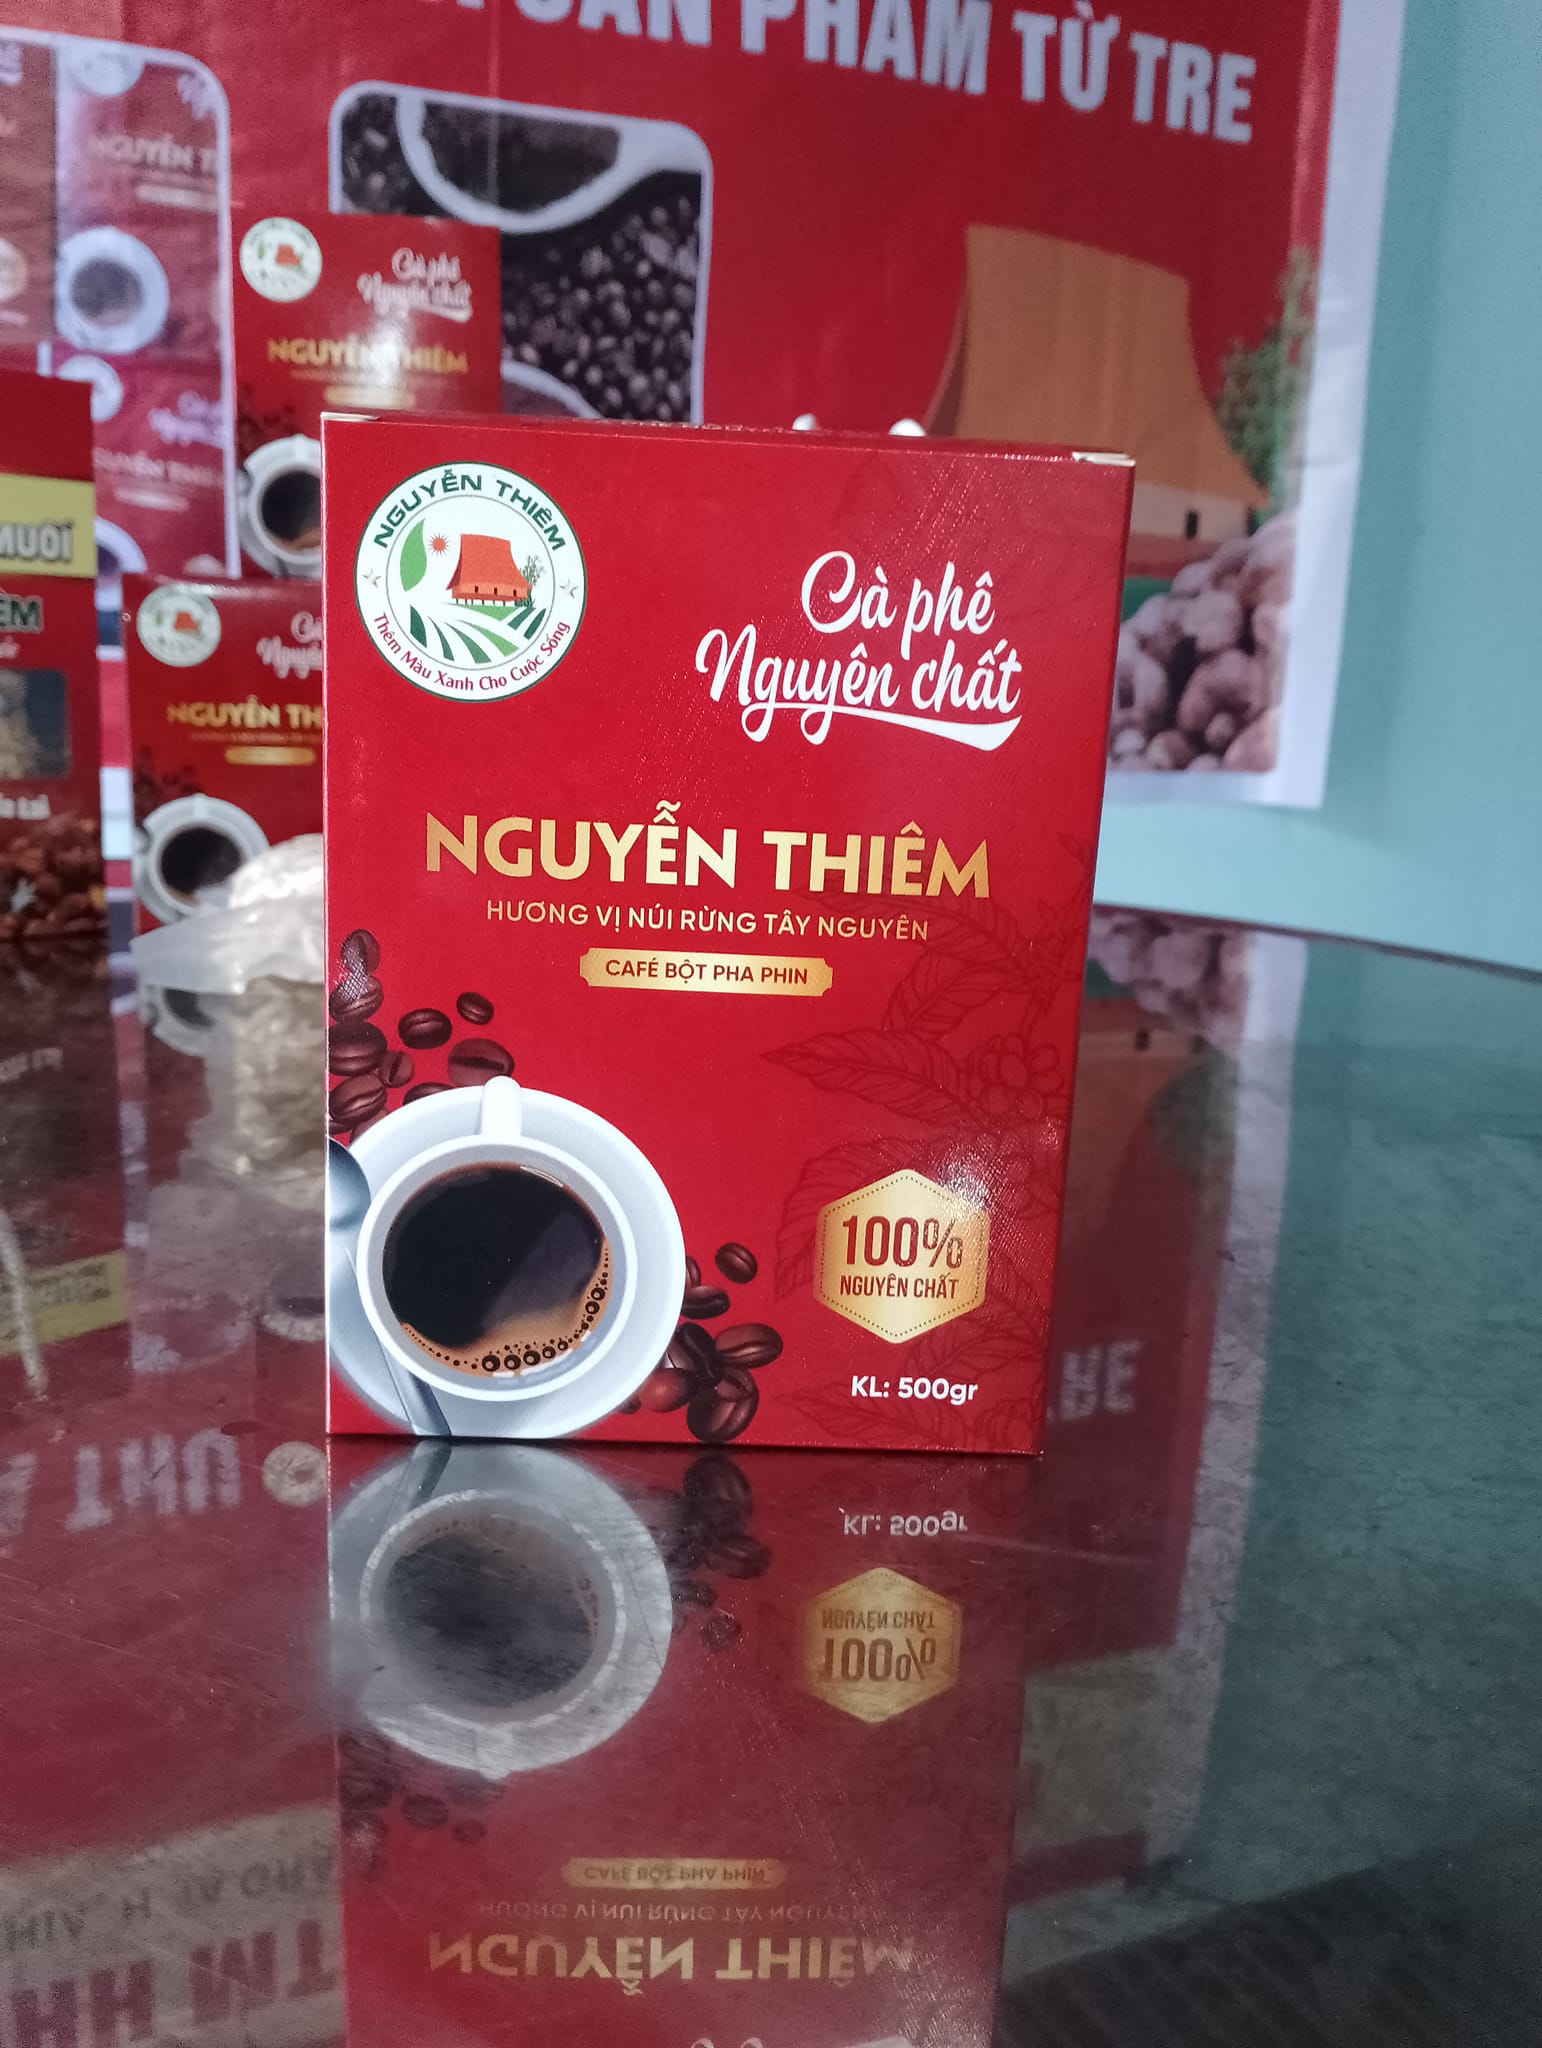 Nguyen Thiem coffee